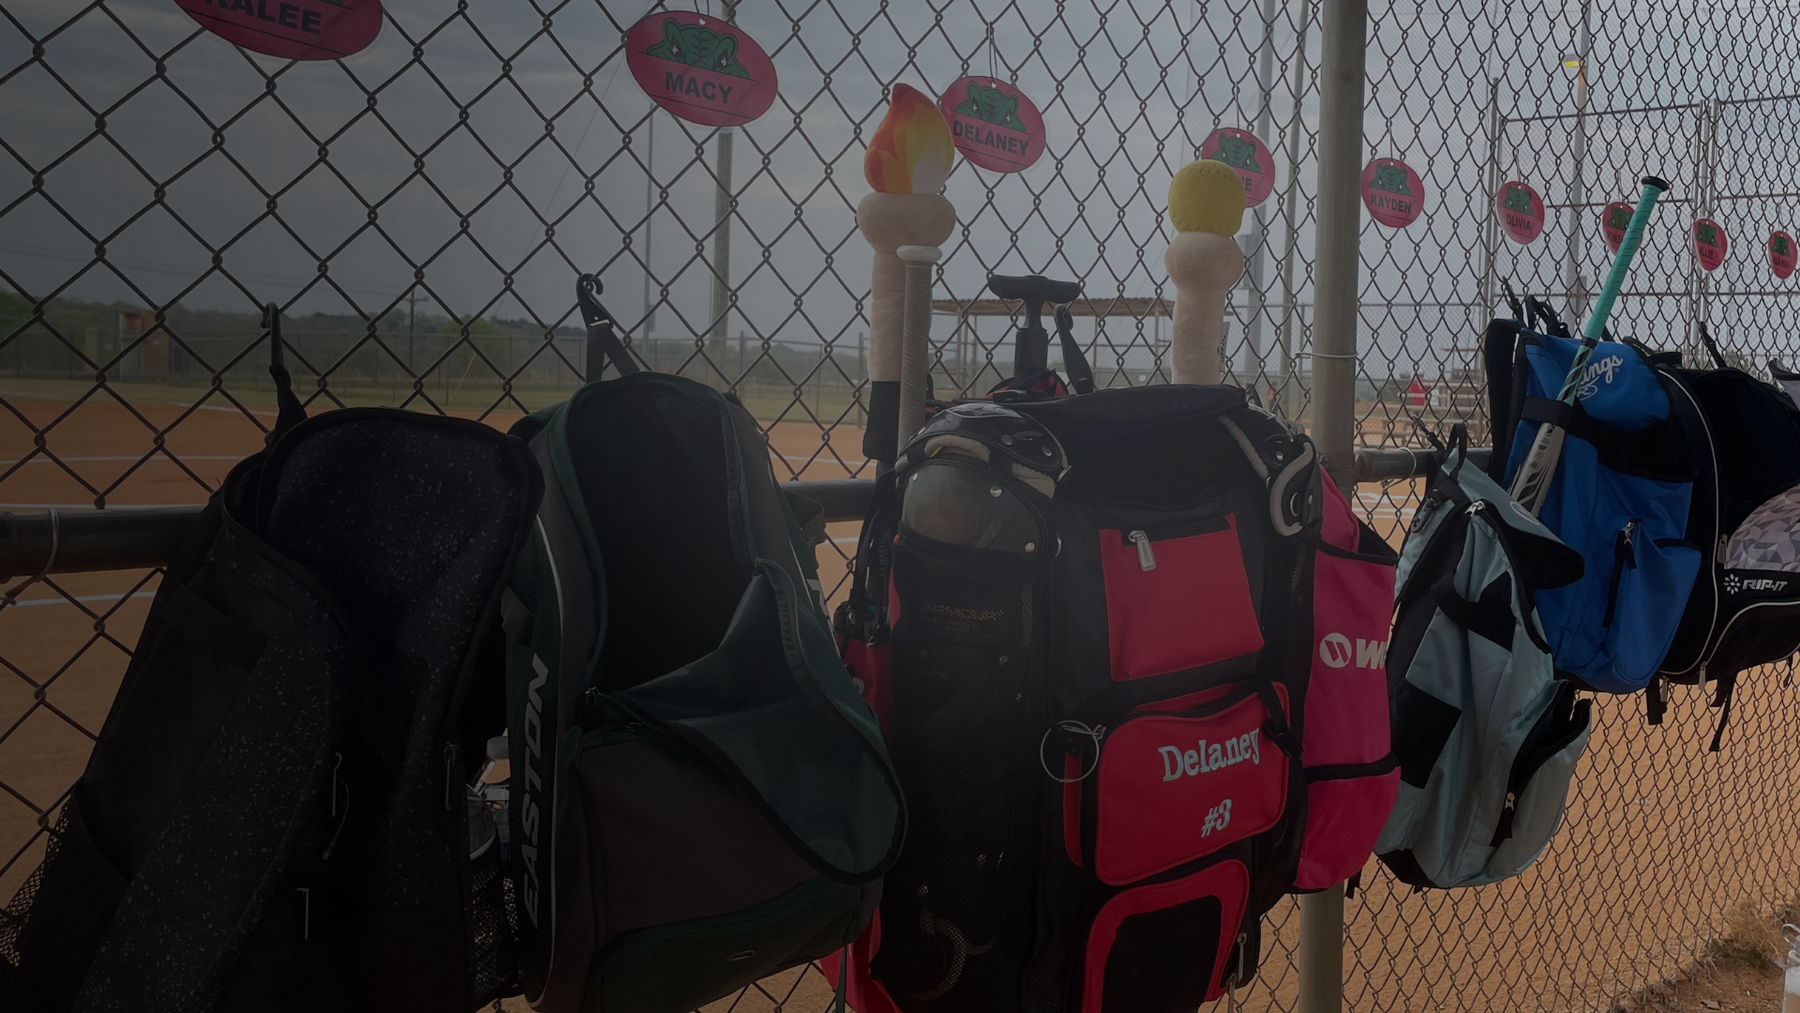 Bat Hats bat covers in baseball or softball dugout